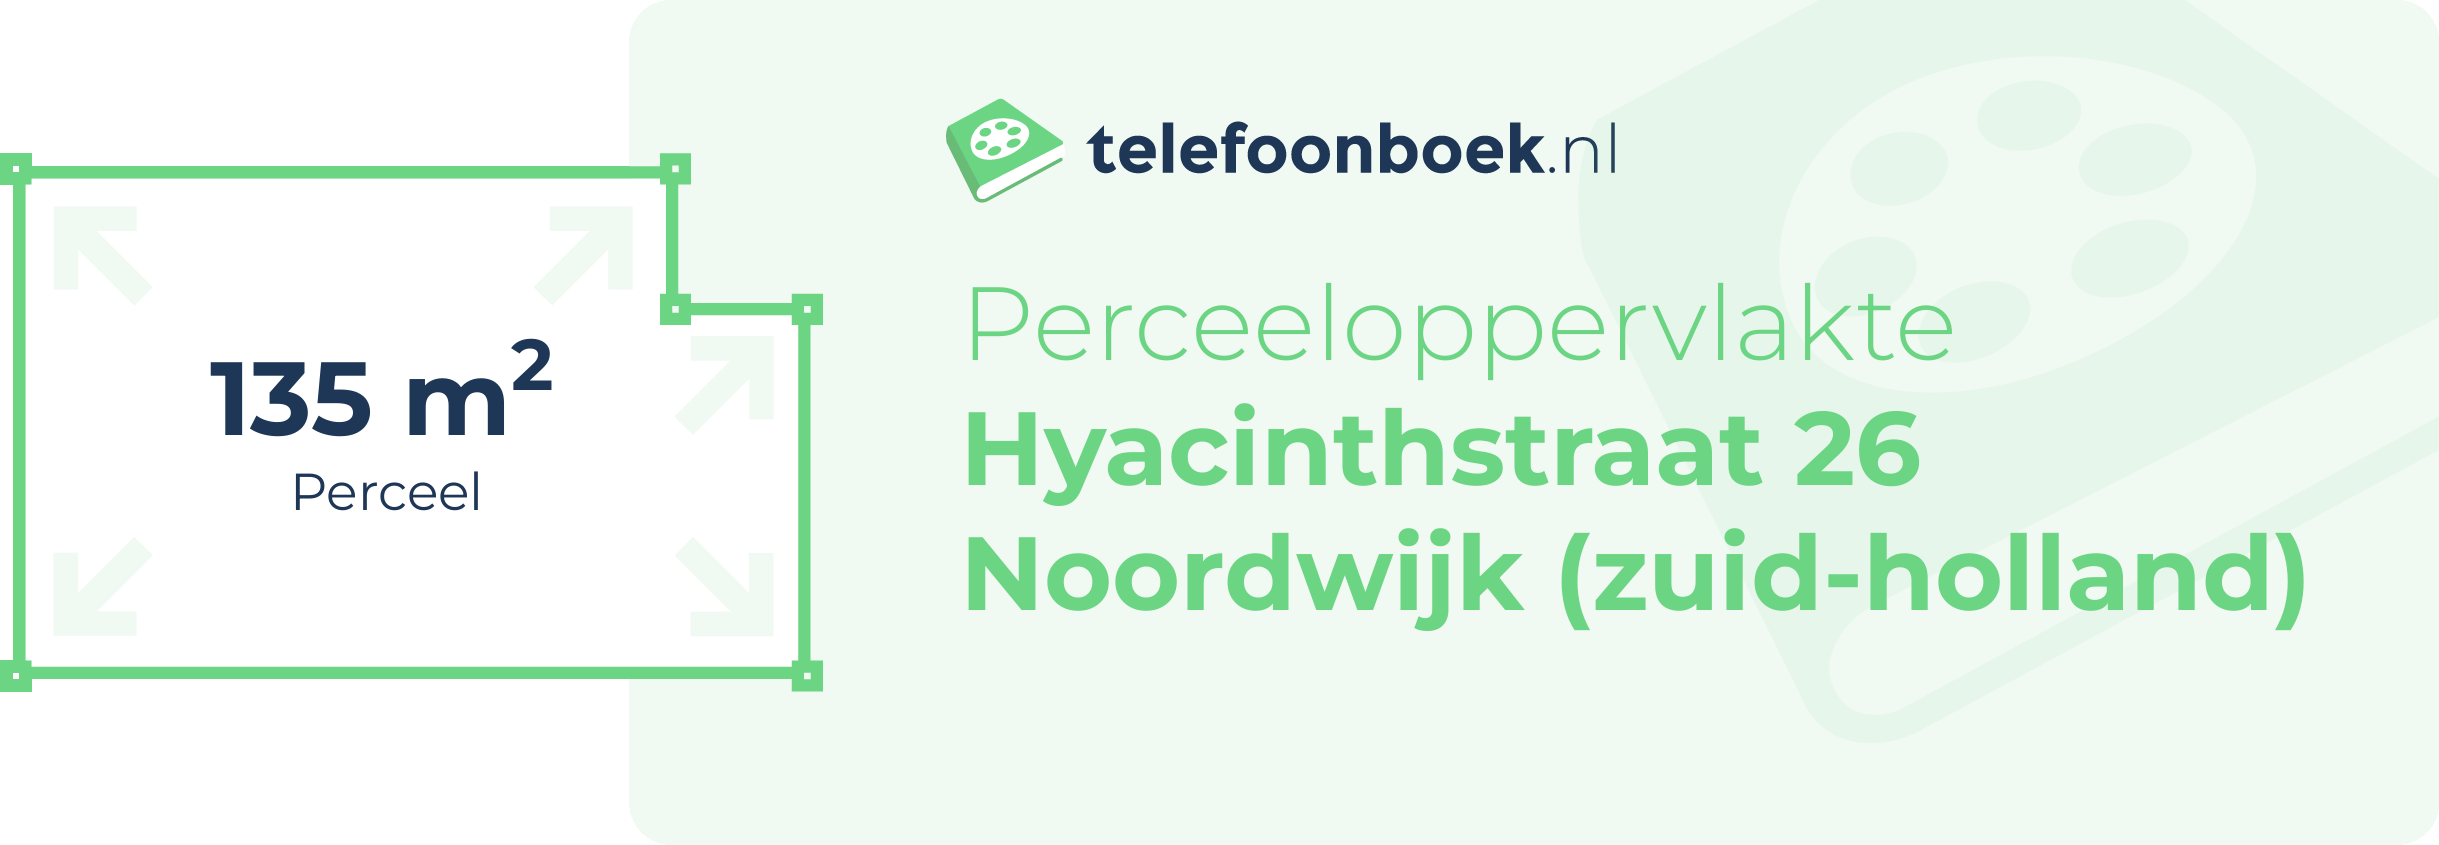 Perceeloppervlakte Hyacinthstraat 26 Noordwijk (Zuid-Holland)